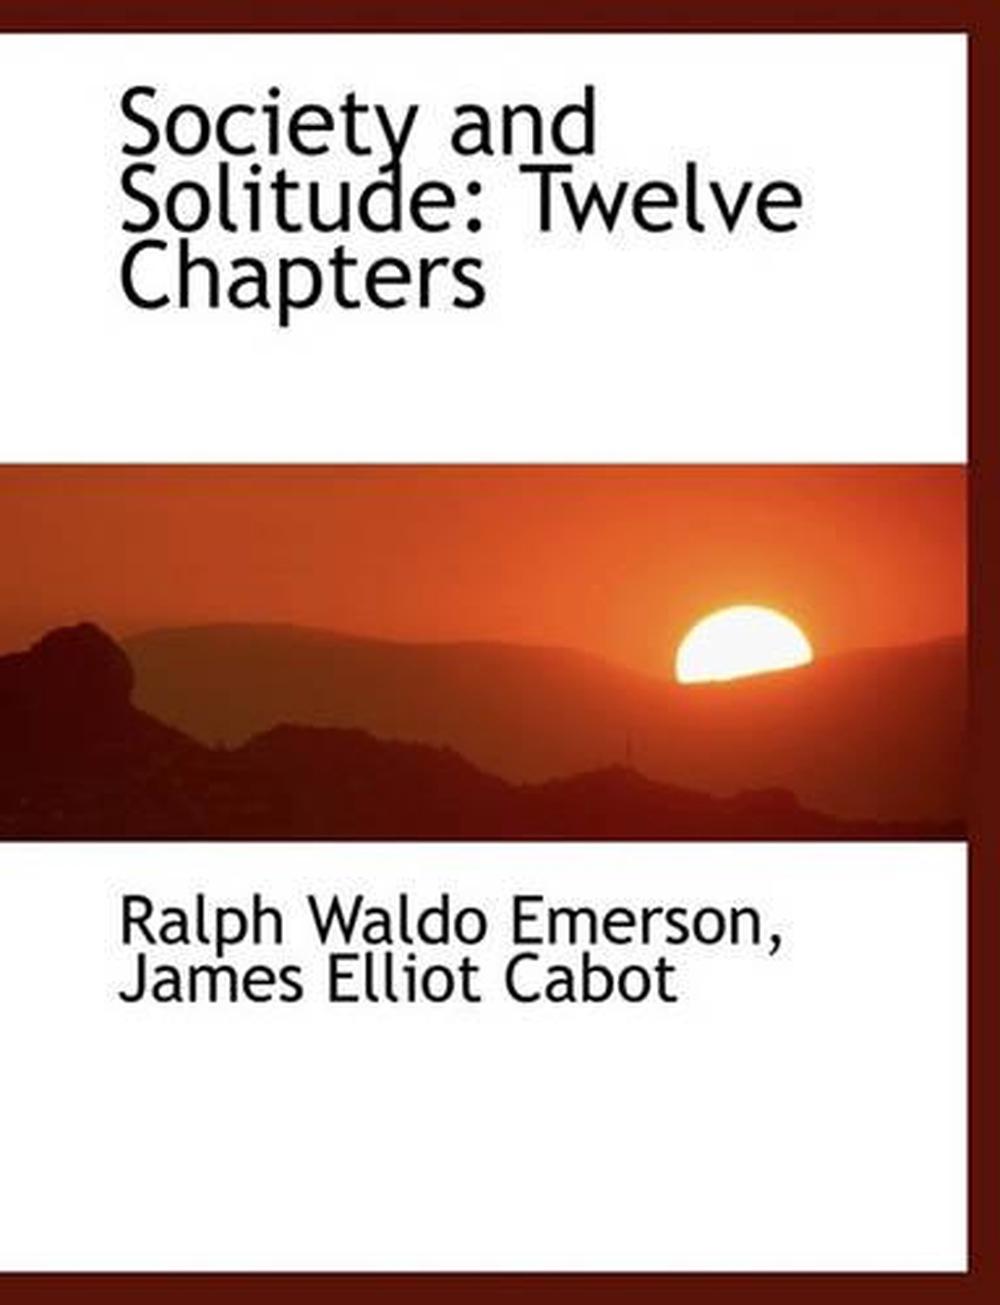 emerson's essay society and solitude